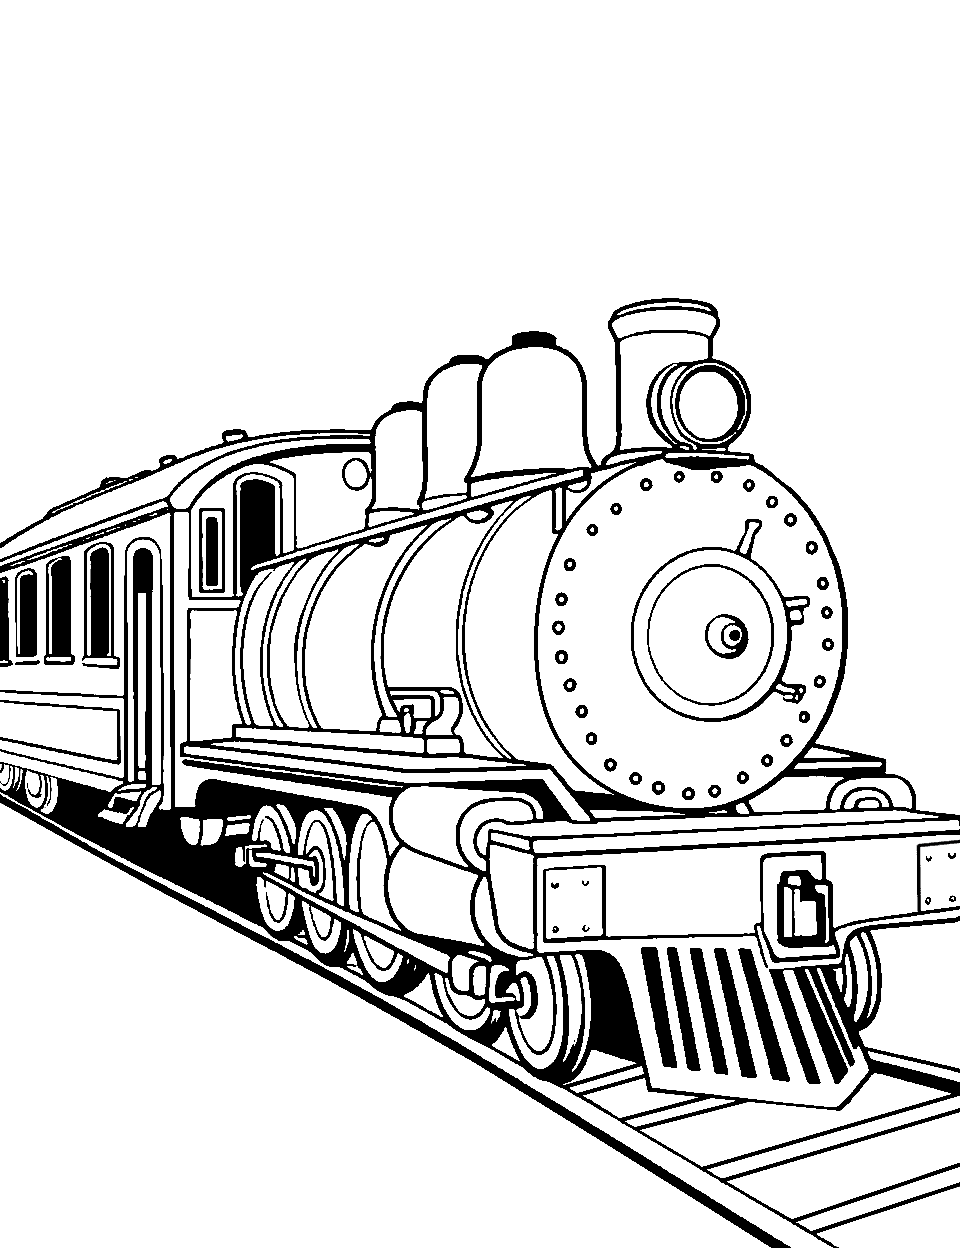 Diesel Engine in Action Coloring Page - A sleek diesel train engine speeding along.